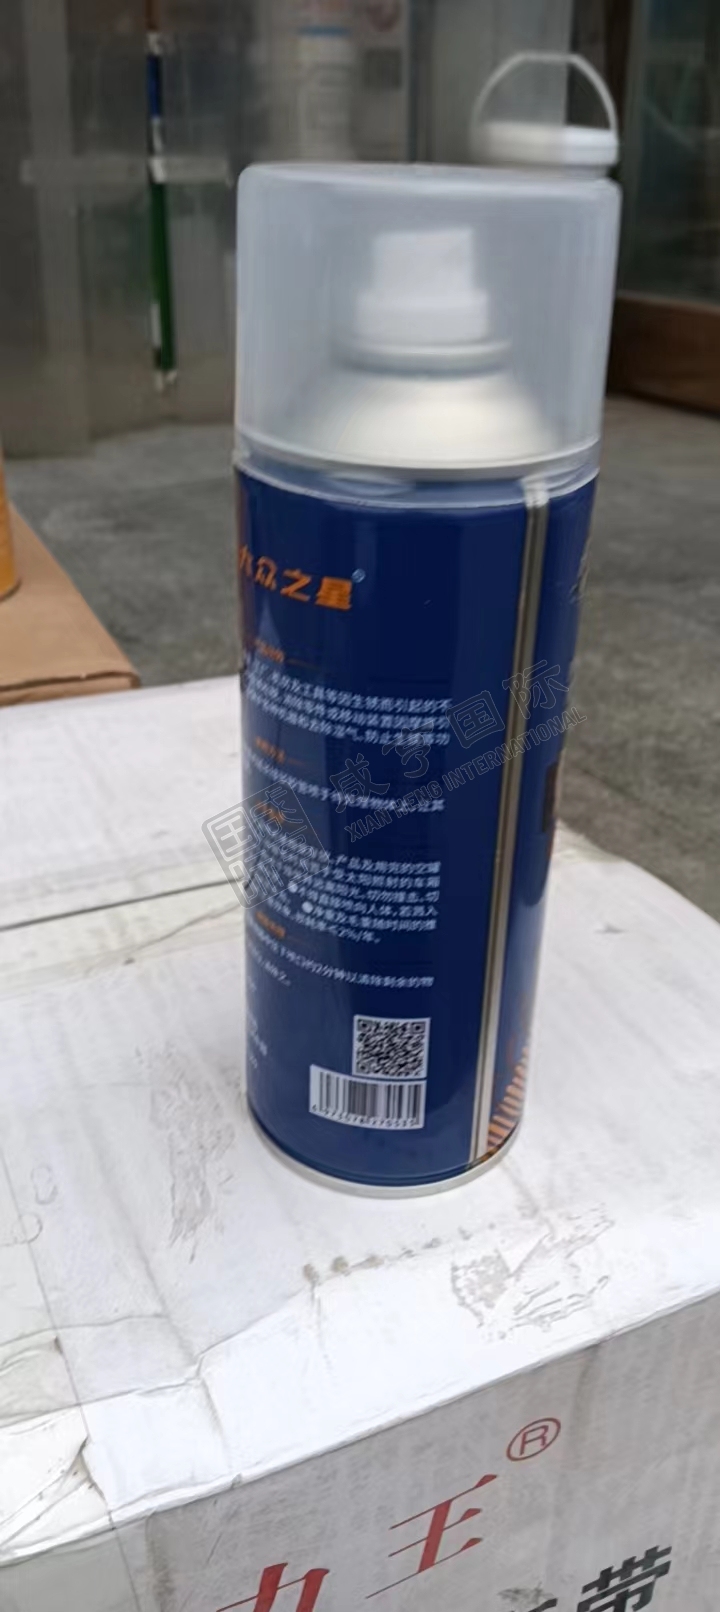 https://xhgj-xhmall-product.oss-cn-shanghai.aliyuncs.com/watermark/GH0301239/z3.jpg